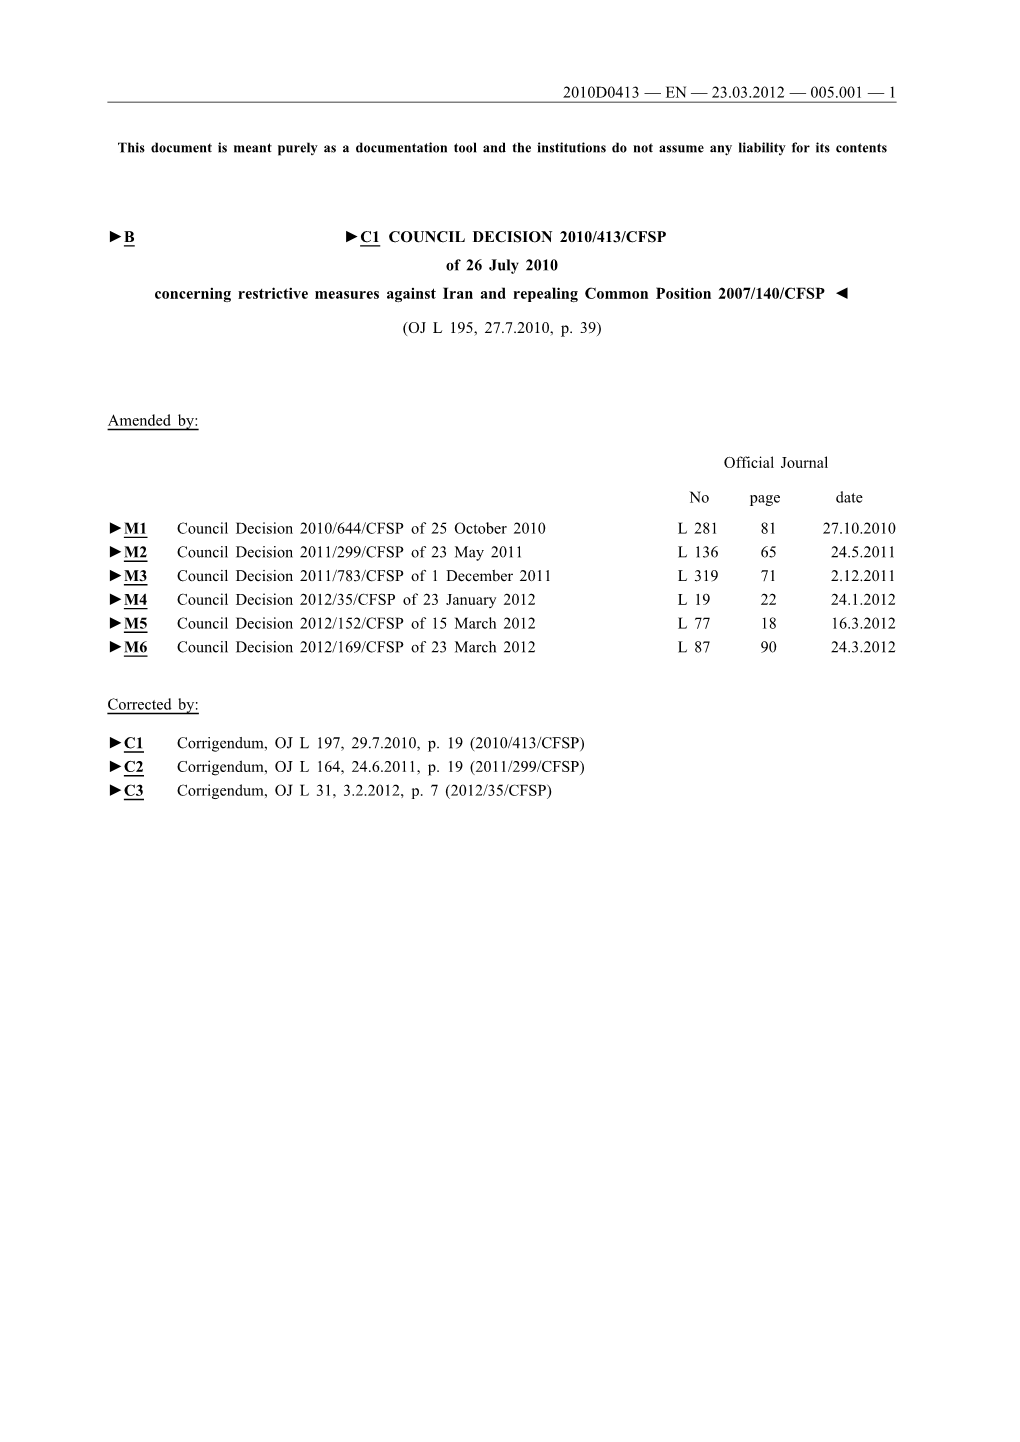 B C1 COUNCIL DECISION 2010/413/CFSP of 26 July